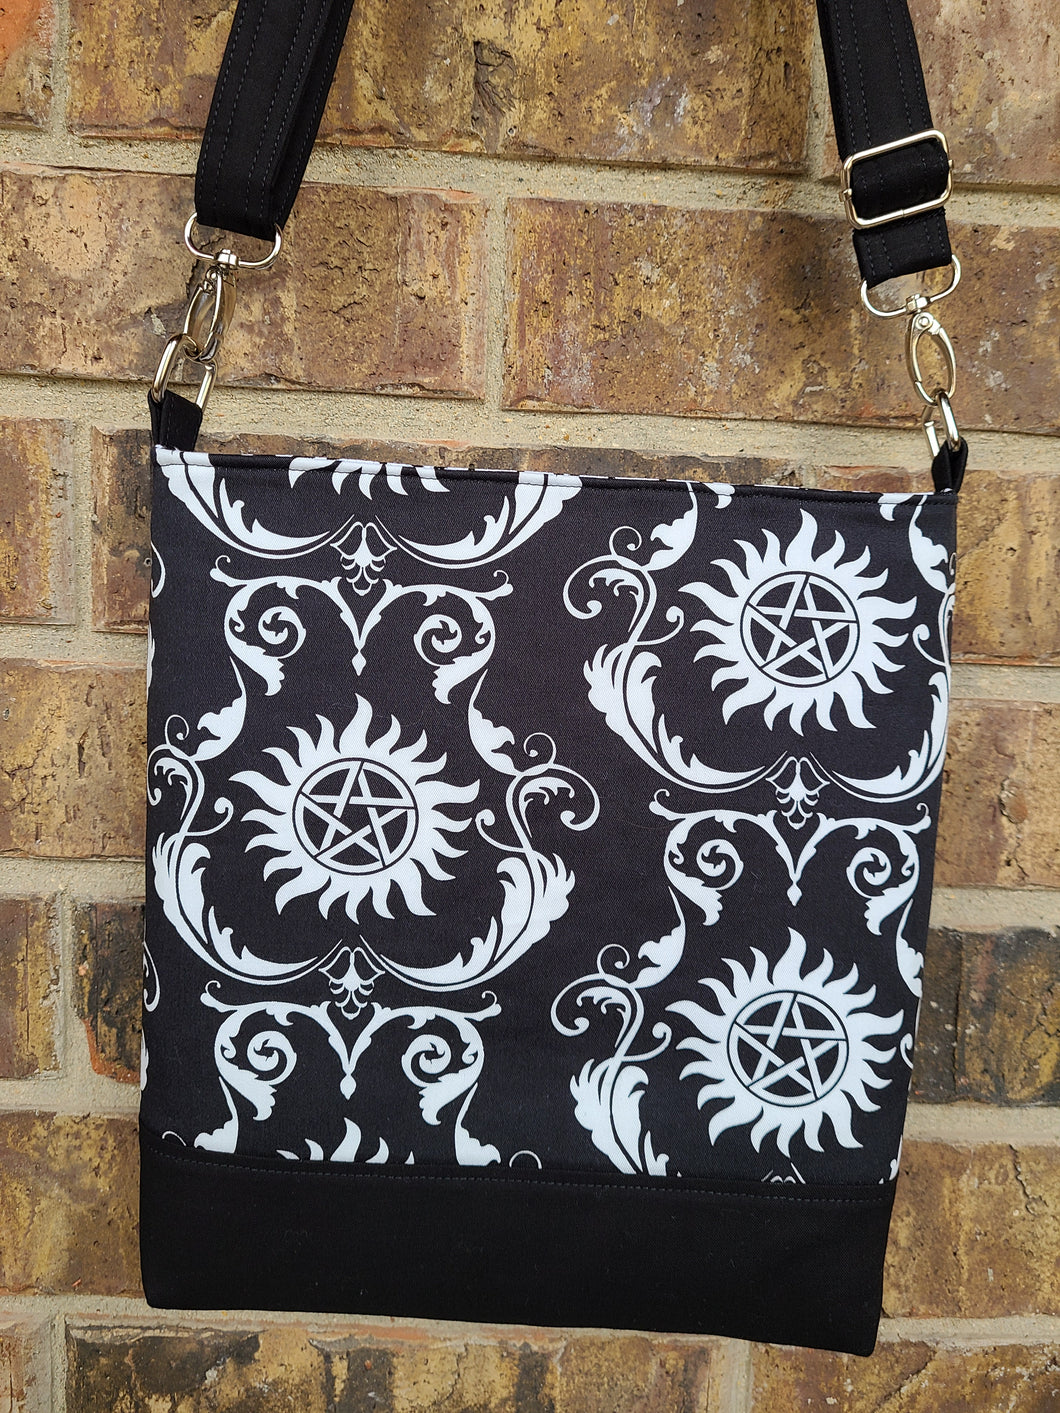 Messenger Bag Made With Super Sigil Inspired Fabric - Adjustable Strap - Zippered Closure - Zippered Pocket - Cross Body Bag